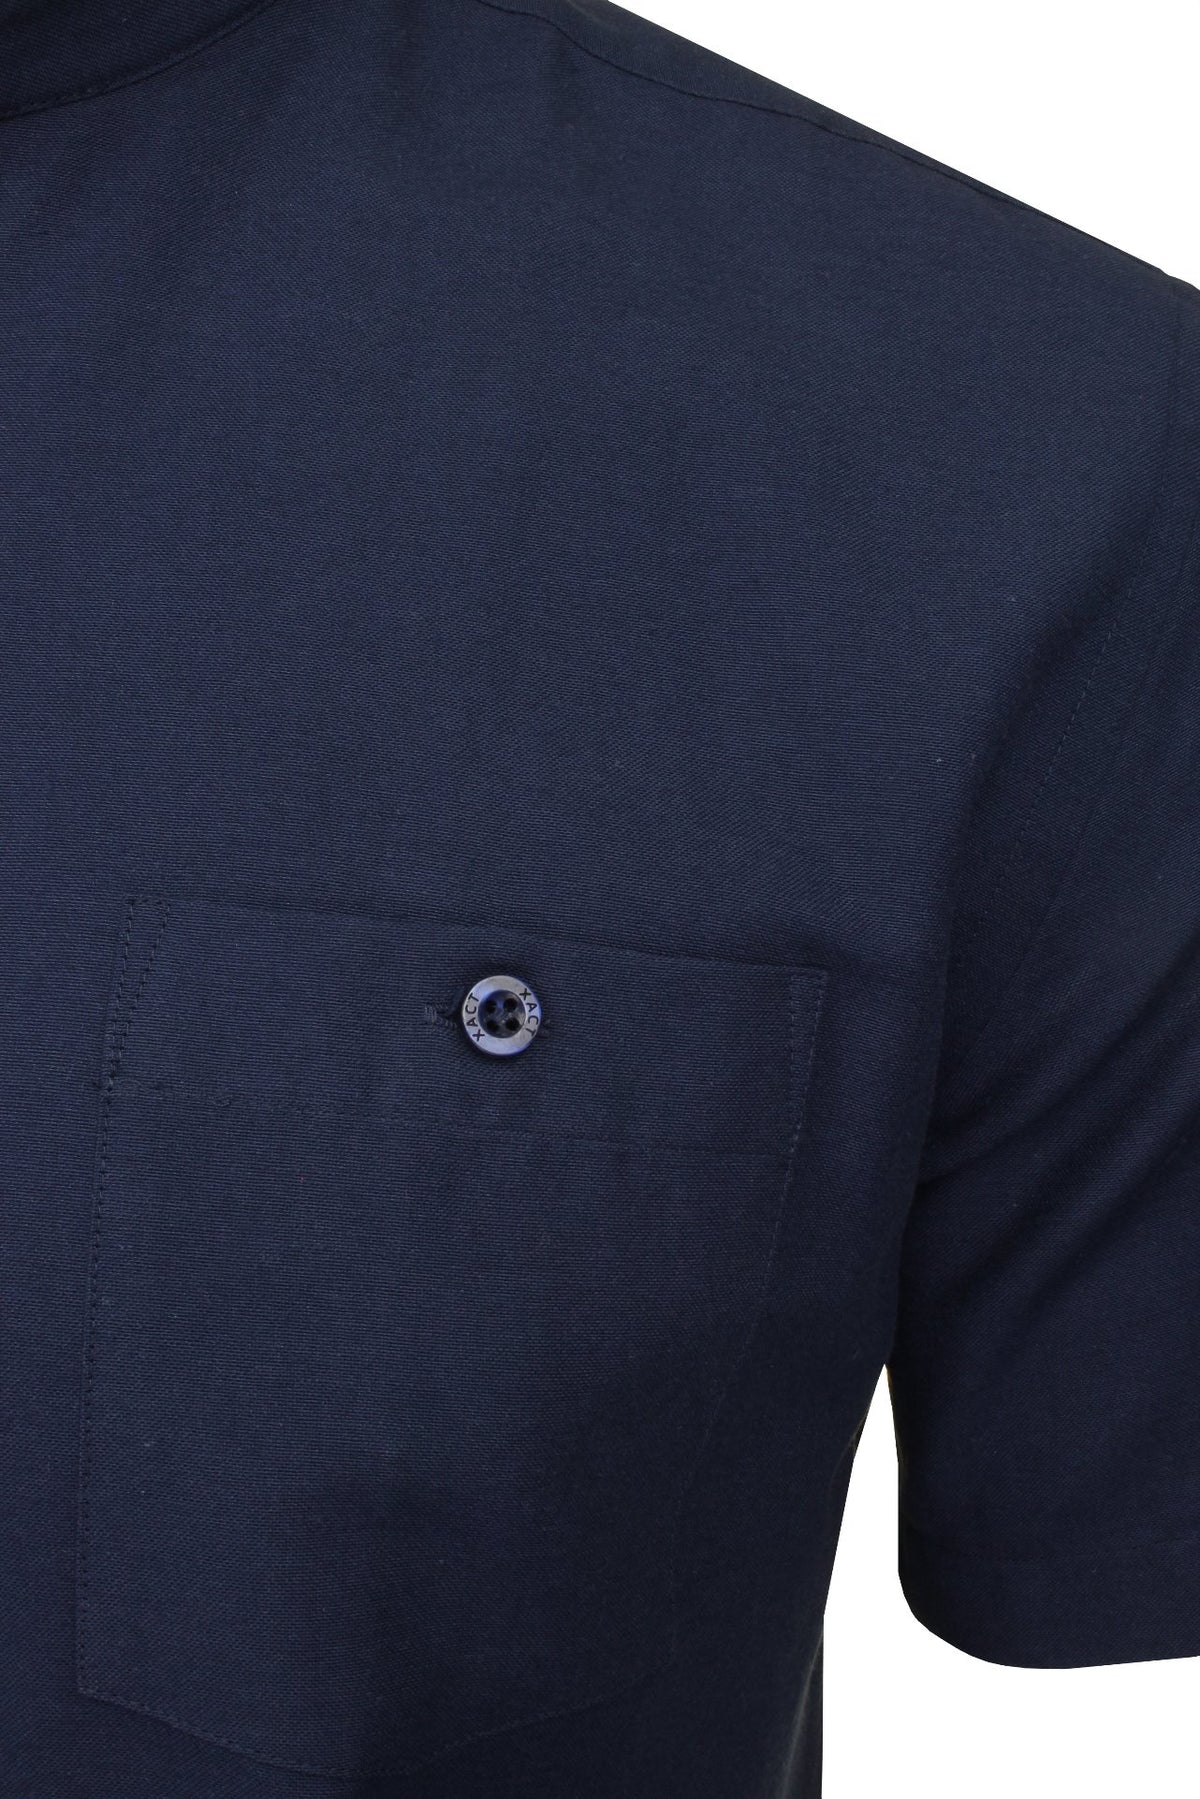 Xact Men's Grandad Collar Oxford Shirt Slim Fit Short Sleeved, 02, Xsh1022, Dark Navy